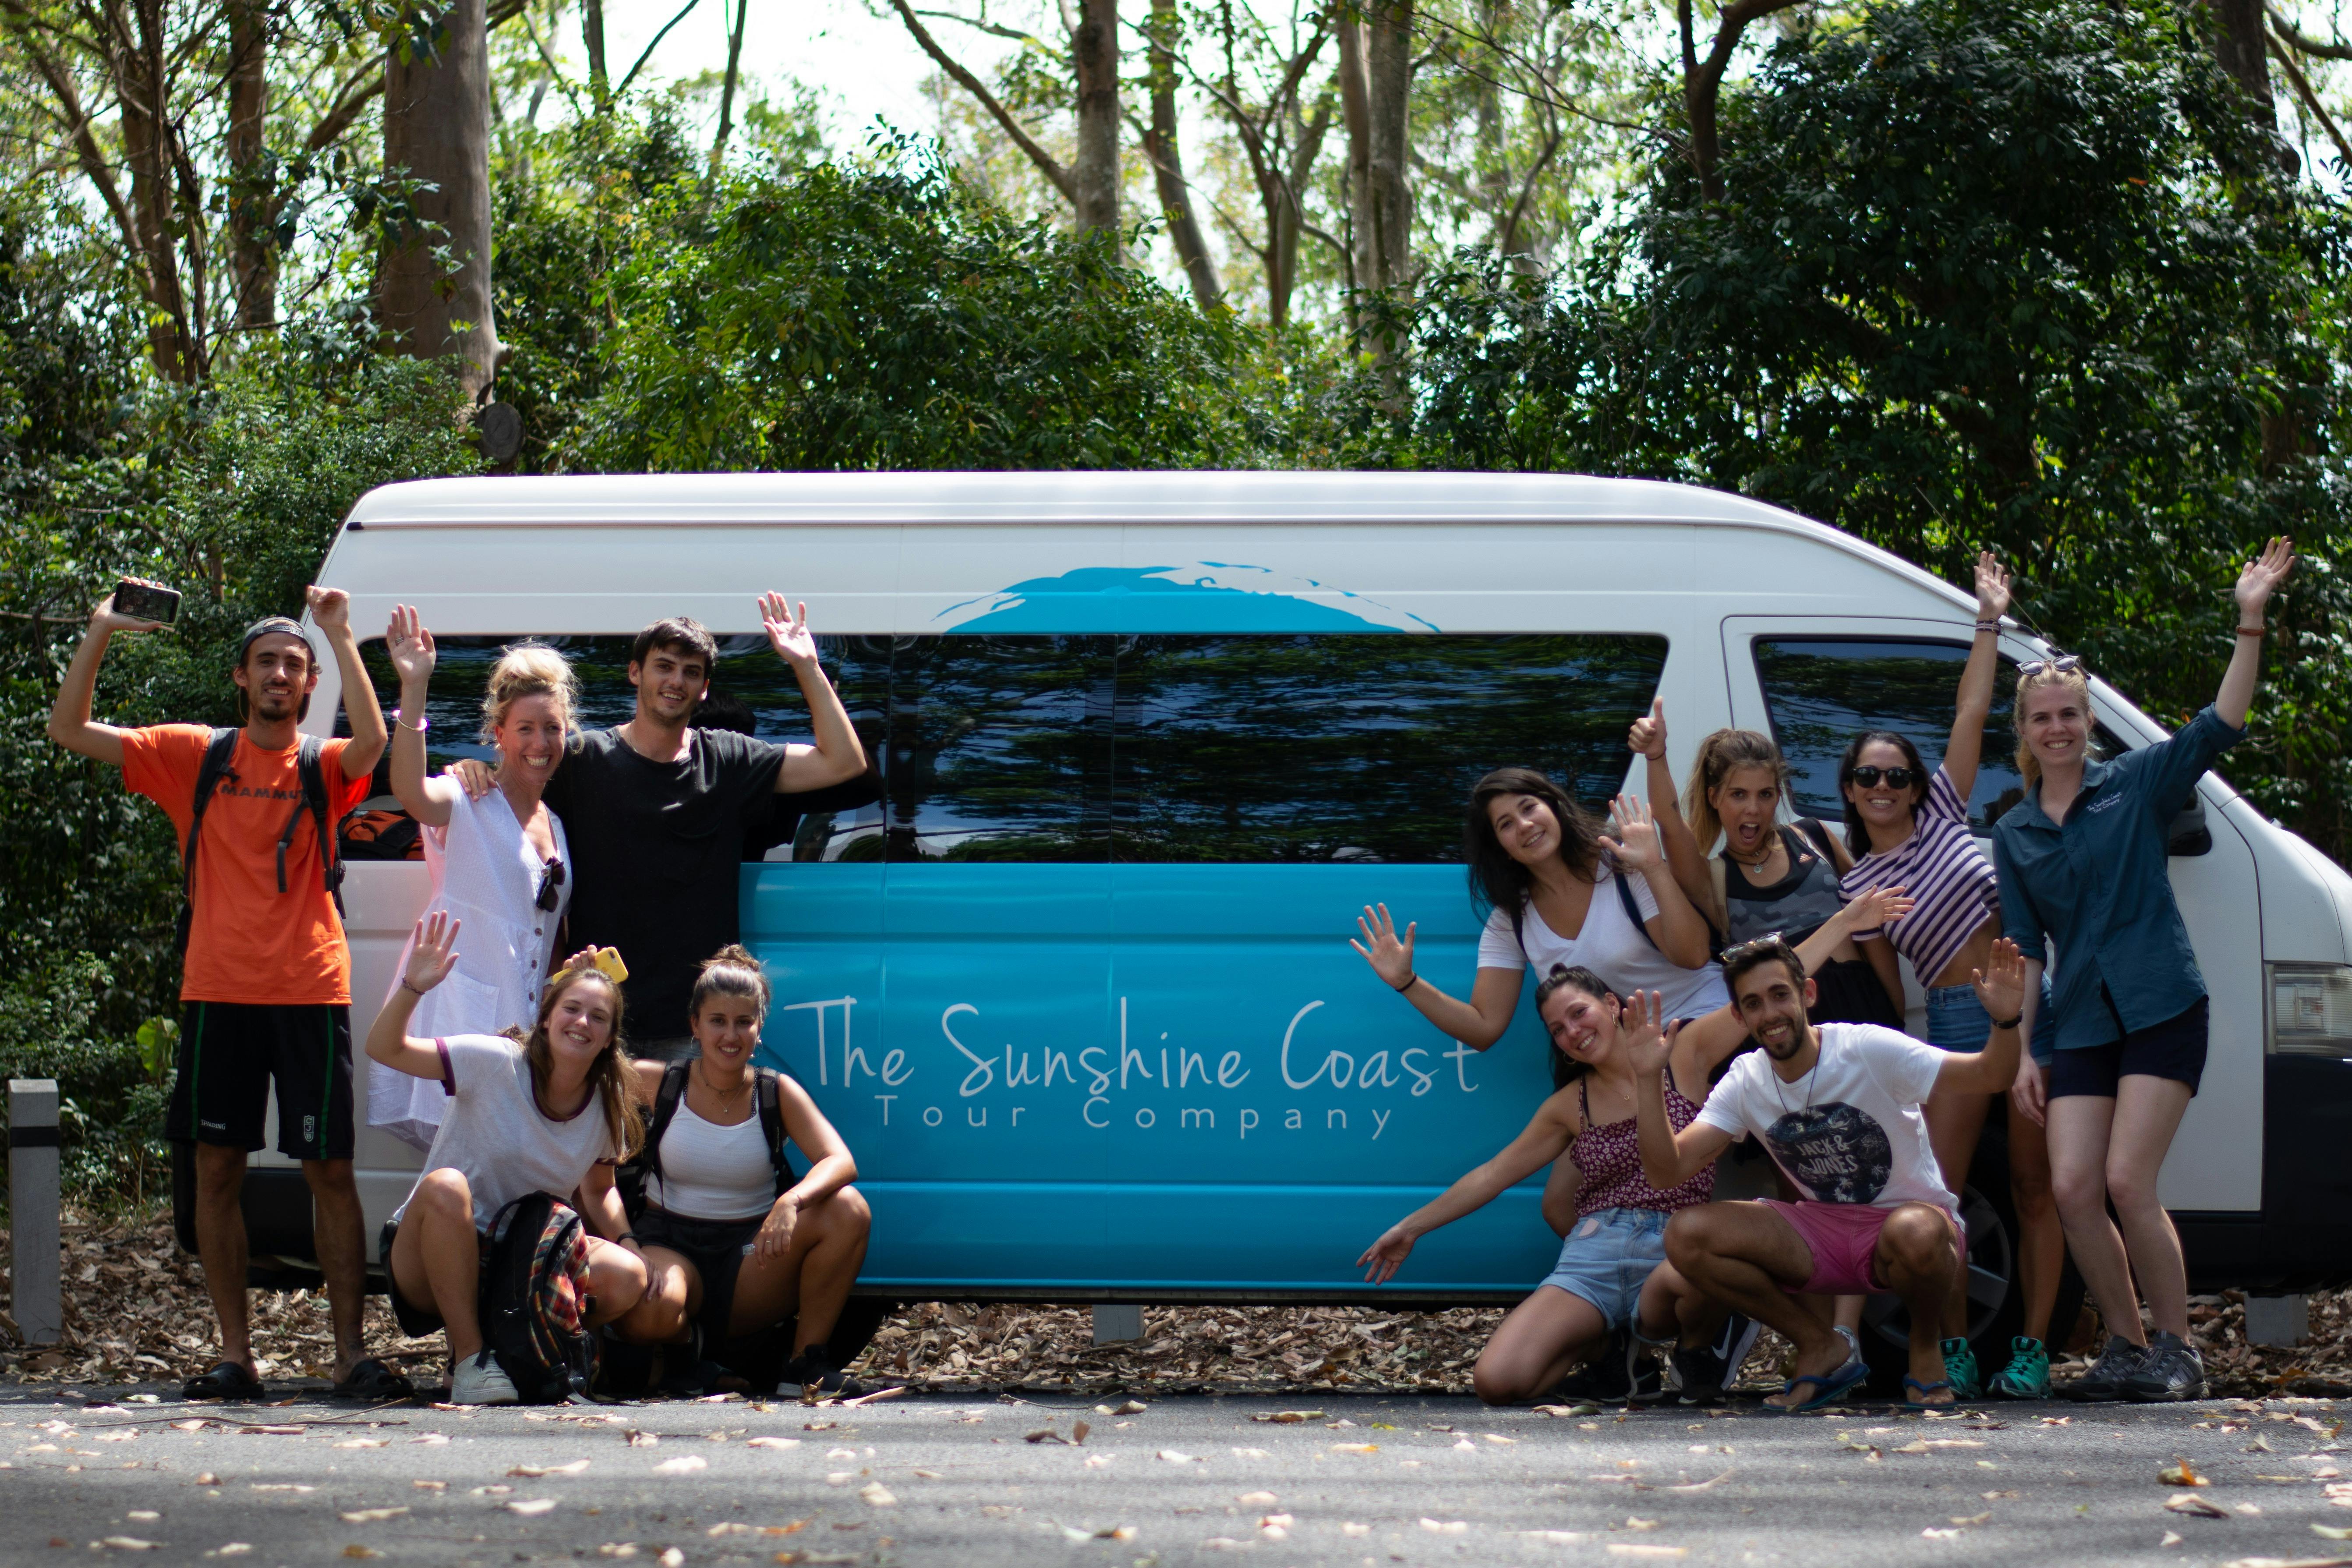 The Sunshine Coast Tour Company